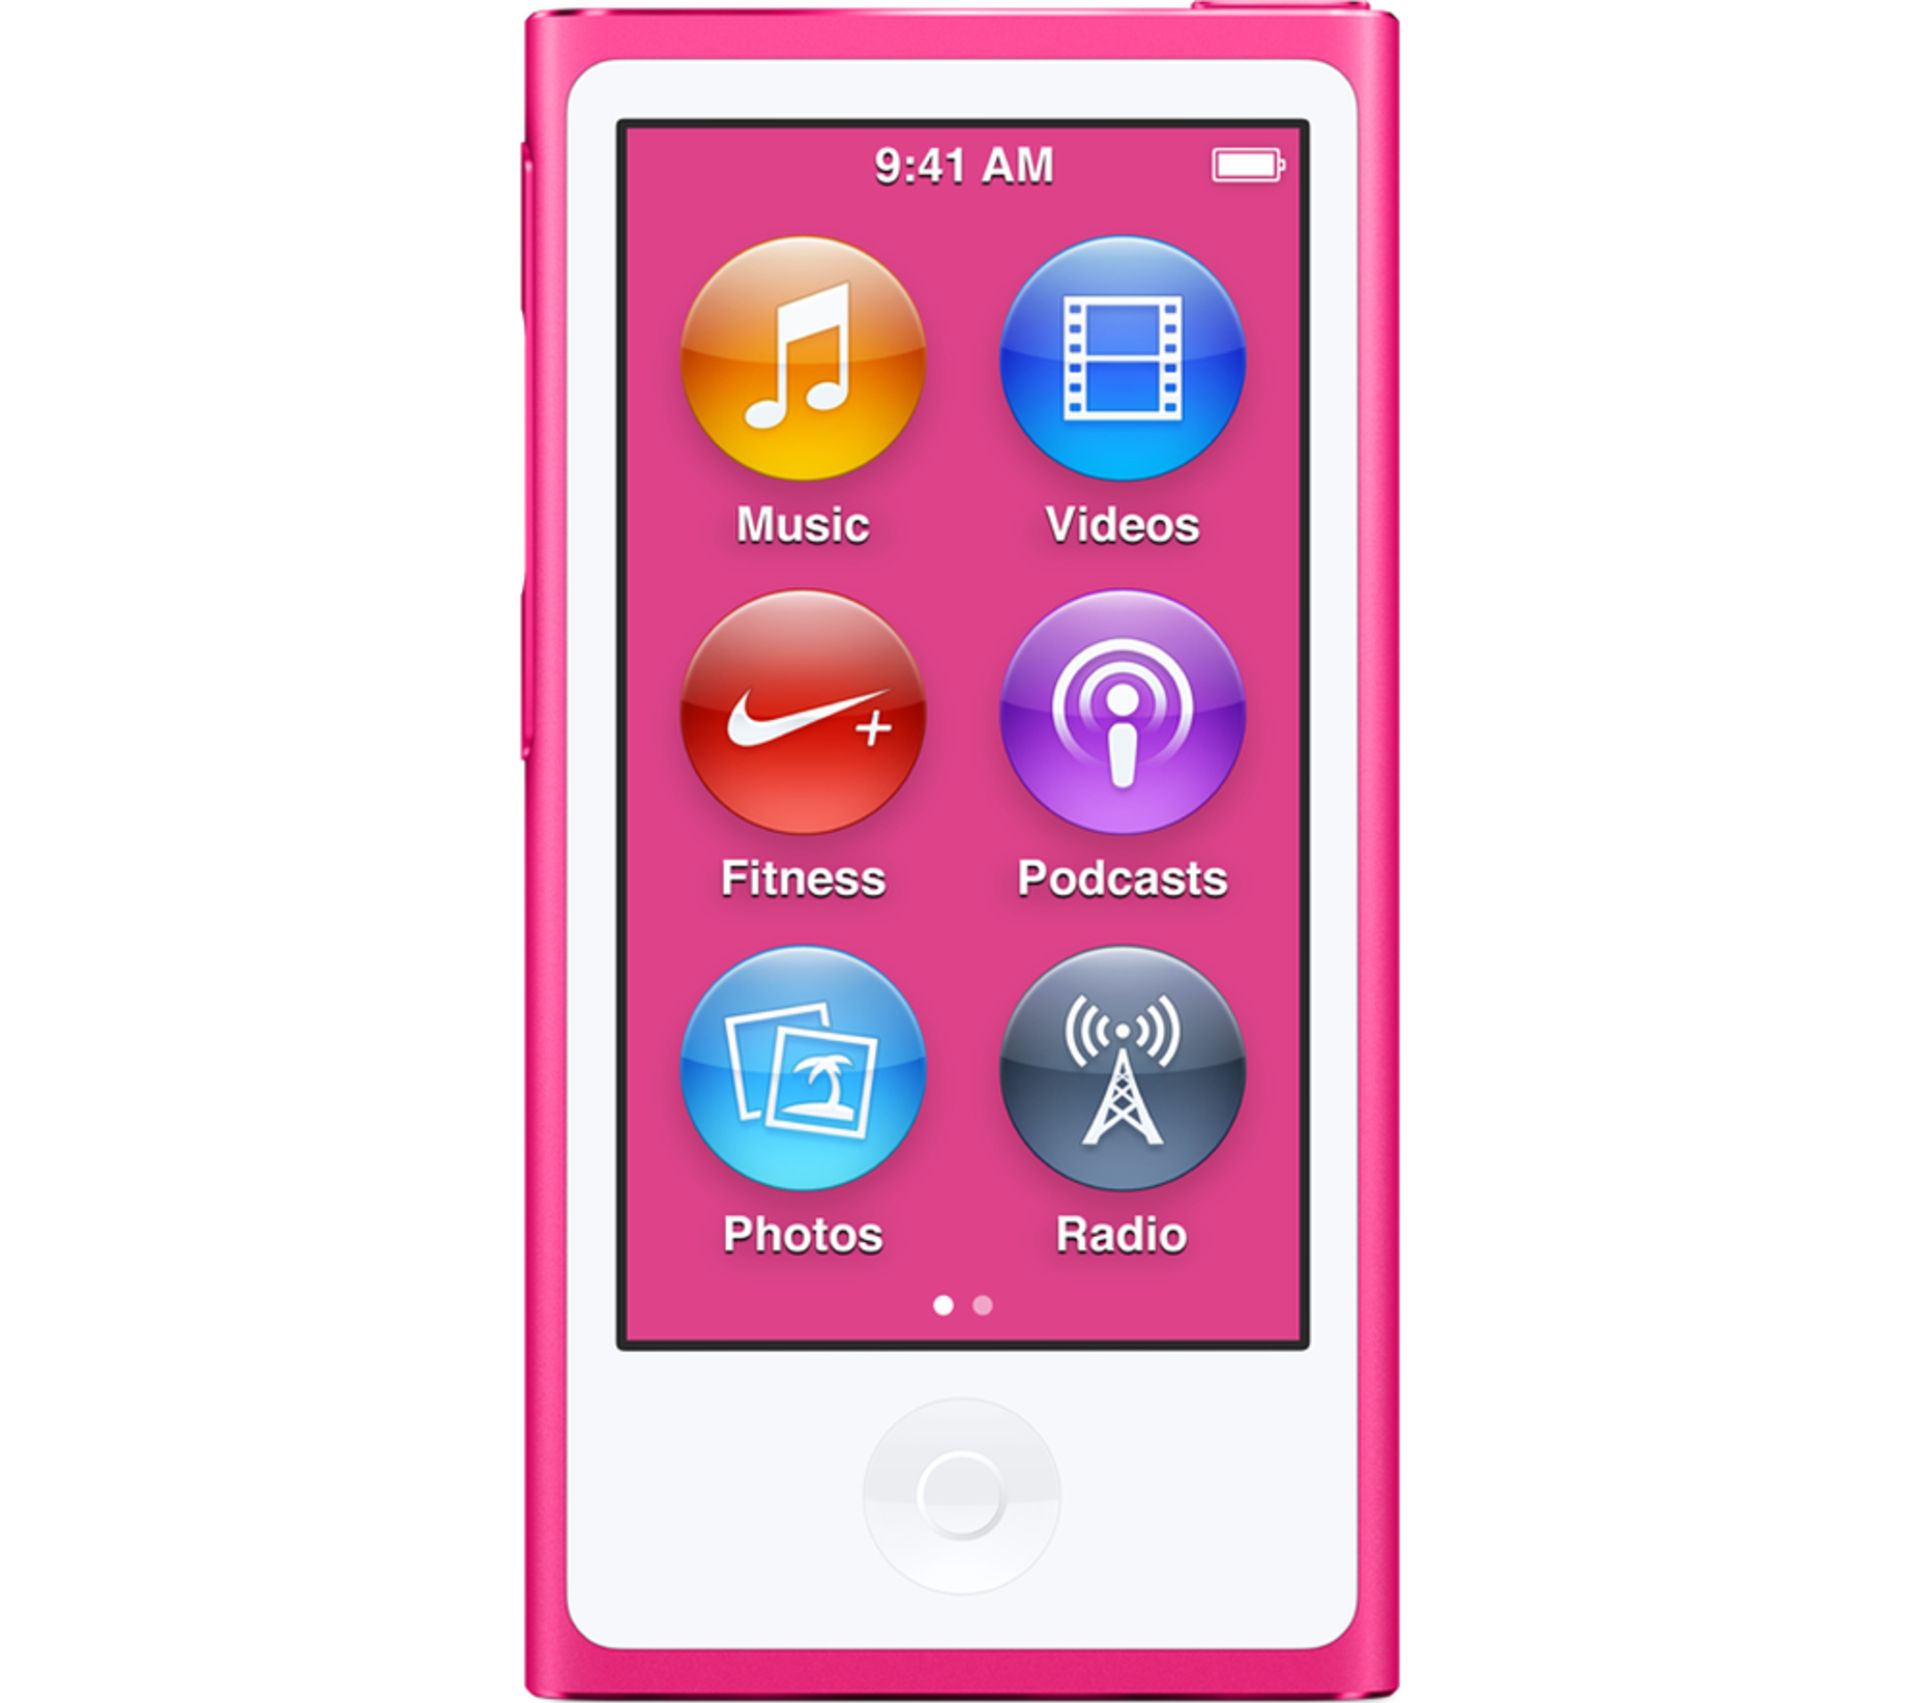 V Grade A Apple IPod Nano 16GB Pink Amazon Price - £109.00